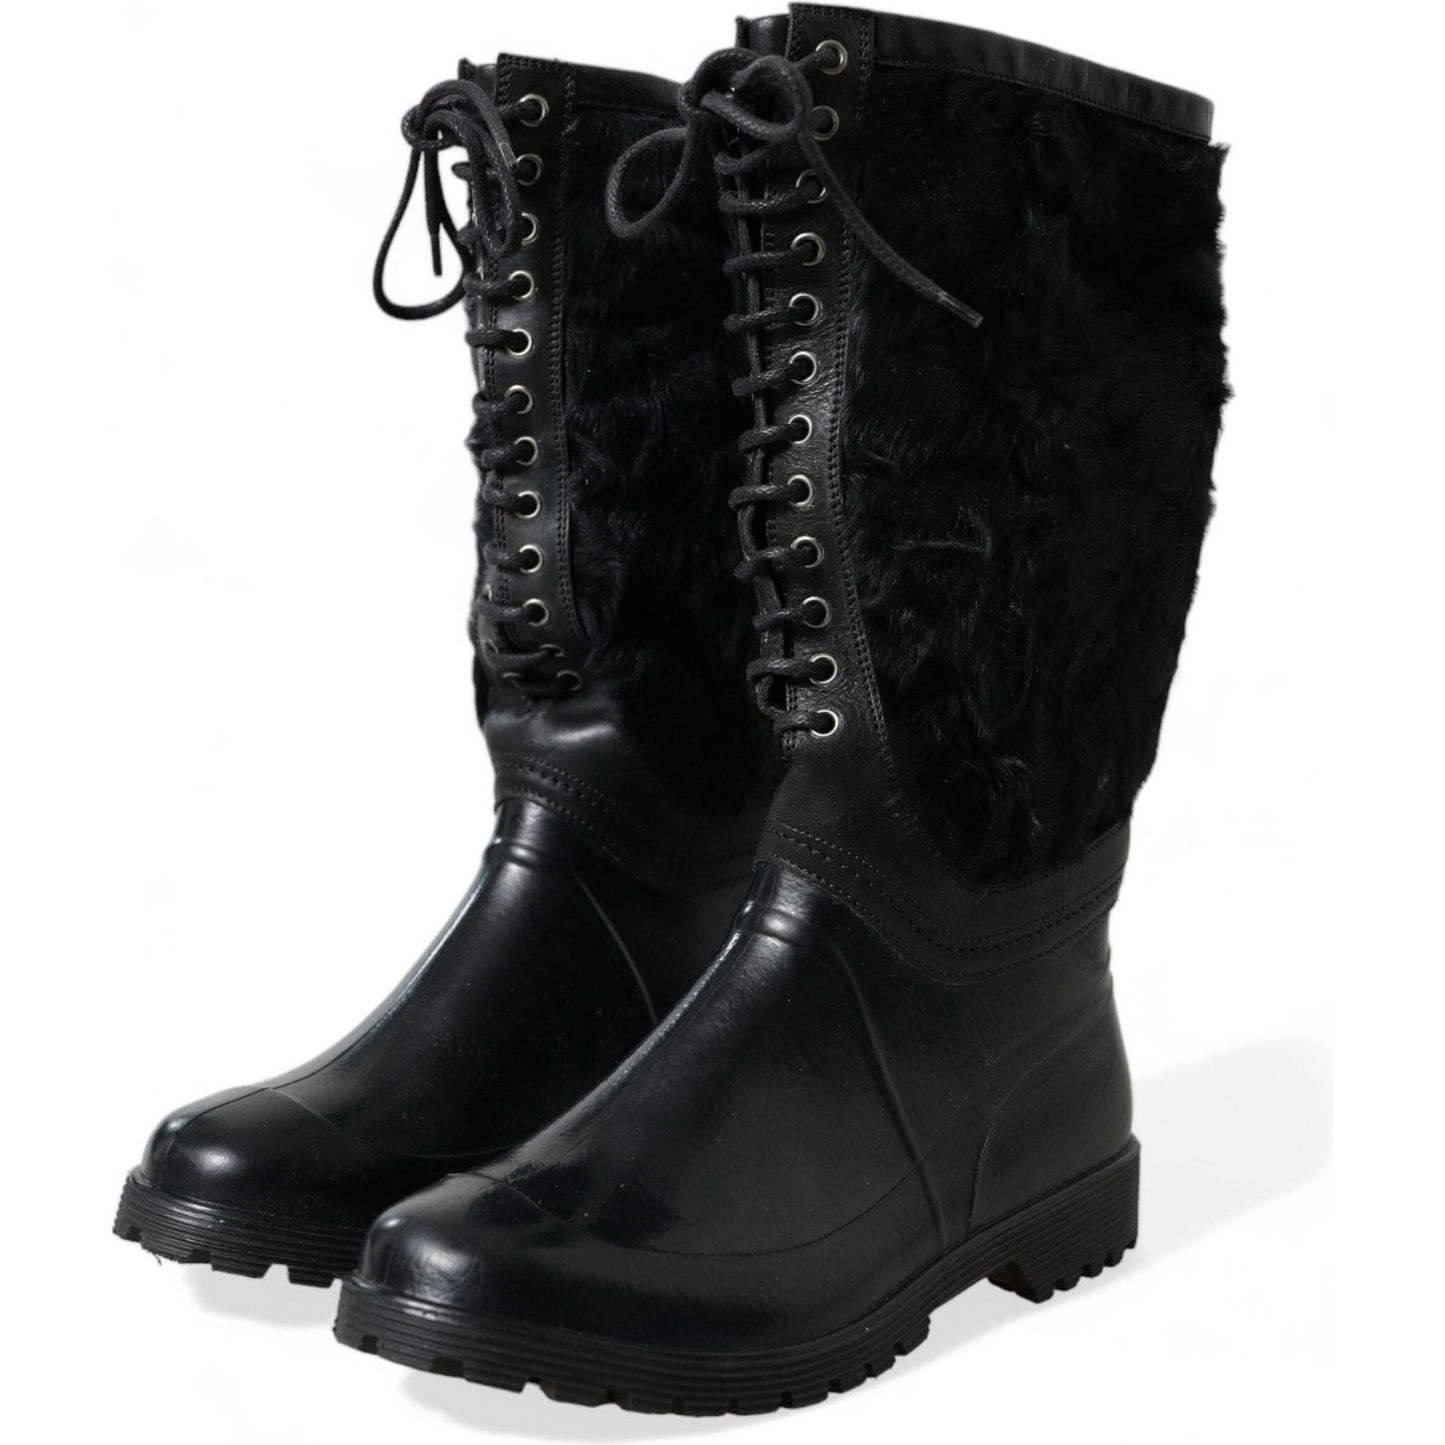 Dolce & Gabbana Sleek Black Shearling Mid Calf Boots black-rubber-lace-up-shearling-rain-boots-shoes